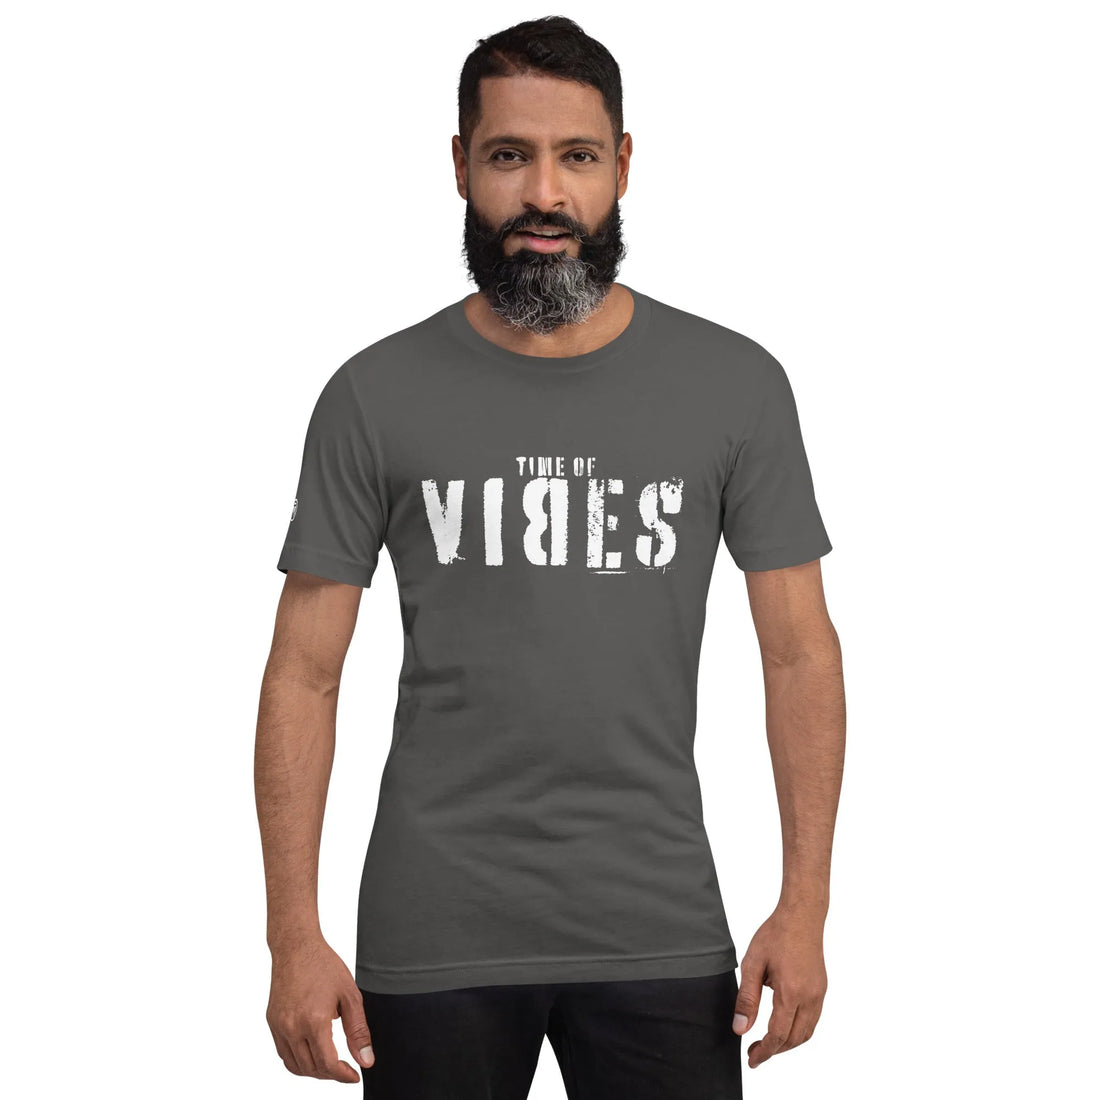 Herren Baumwoll T-Shirt VIBES (Grau/Weiß)